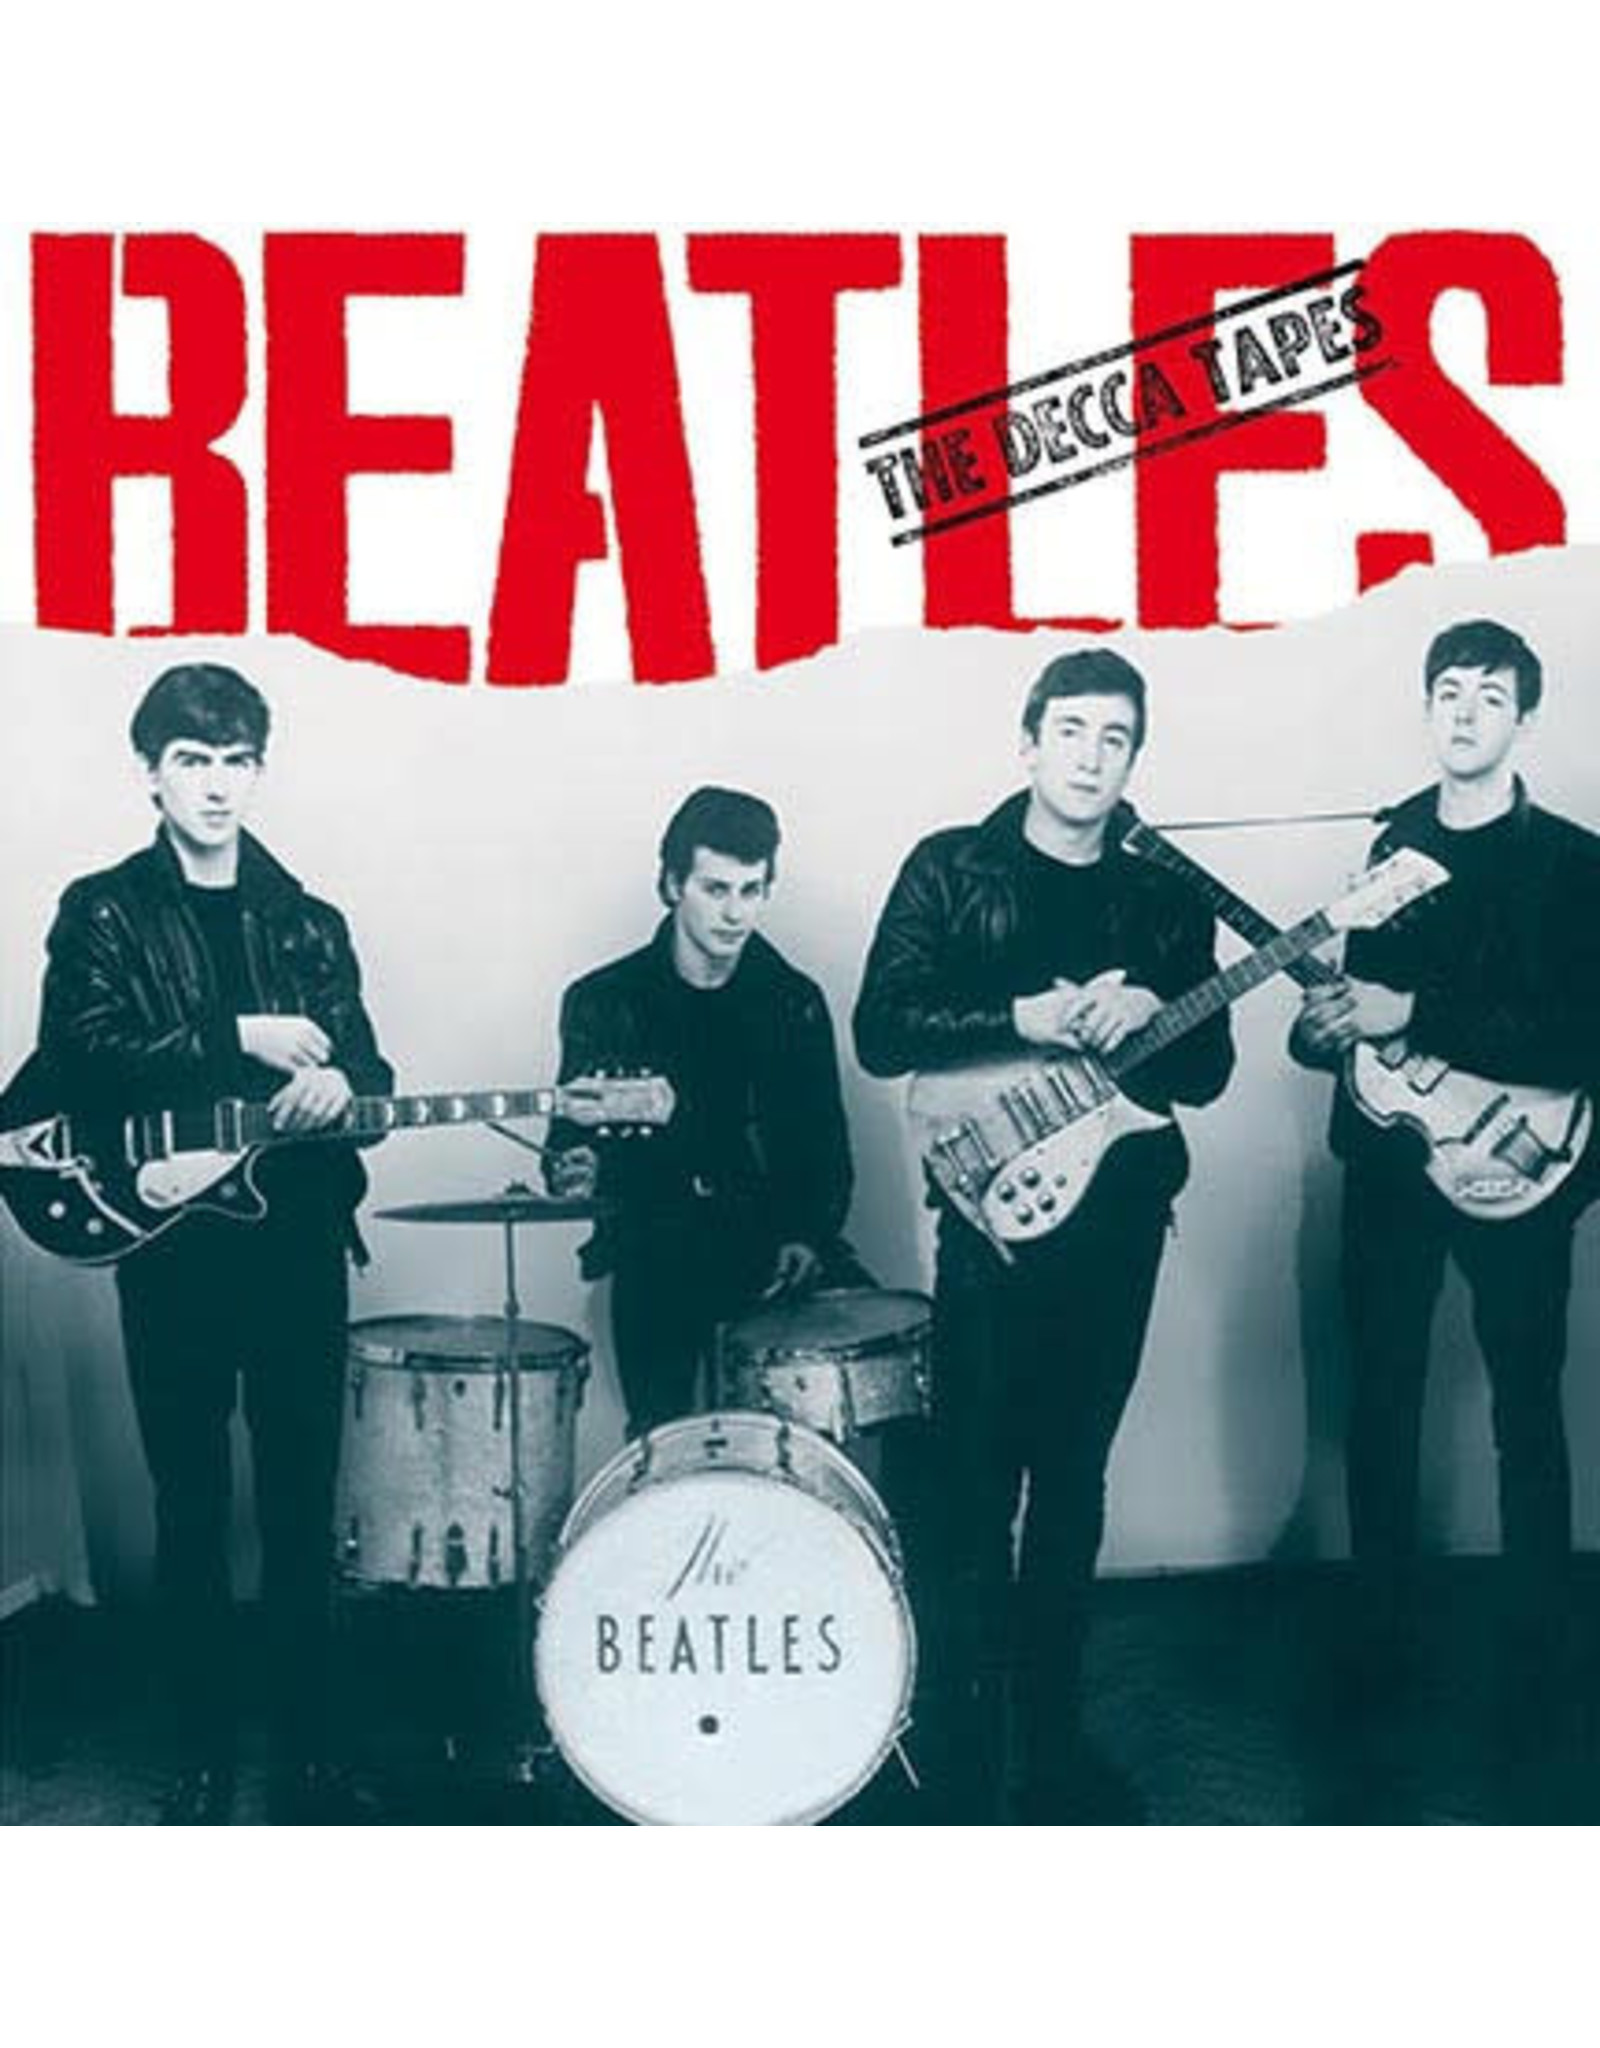 Beatles / Decca Tapes (180g)